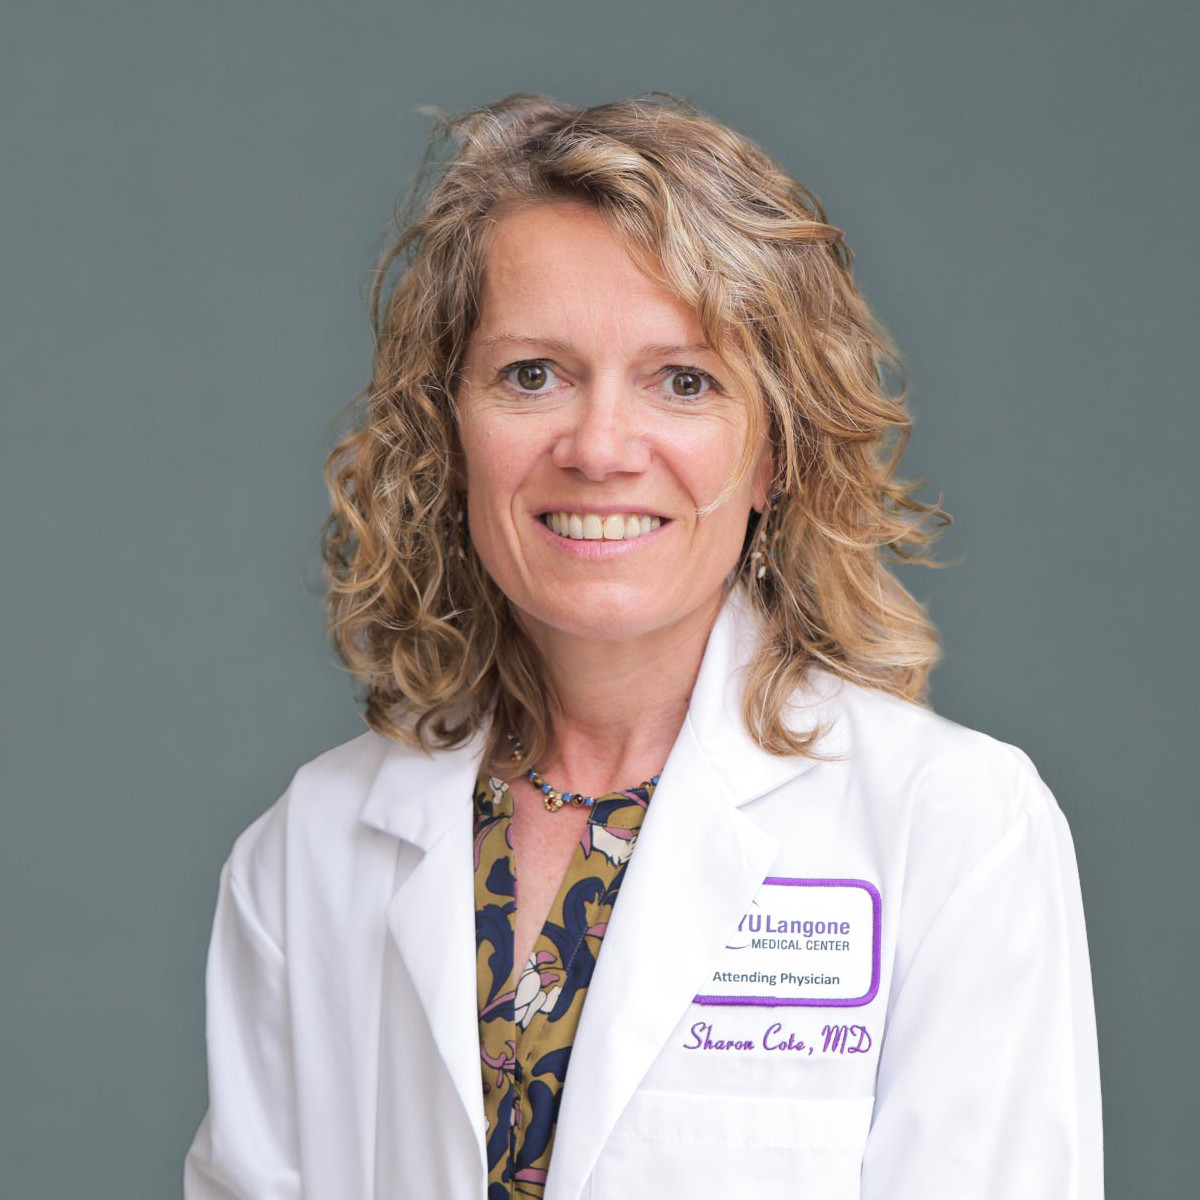 Sharon C. Cote,MD. Obstetrics, Gynecology